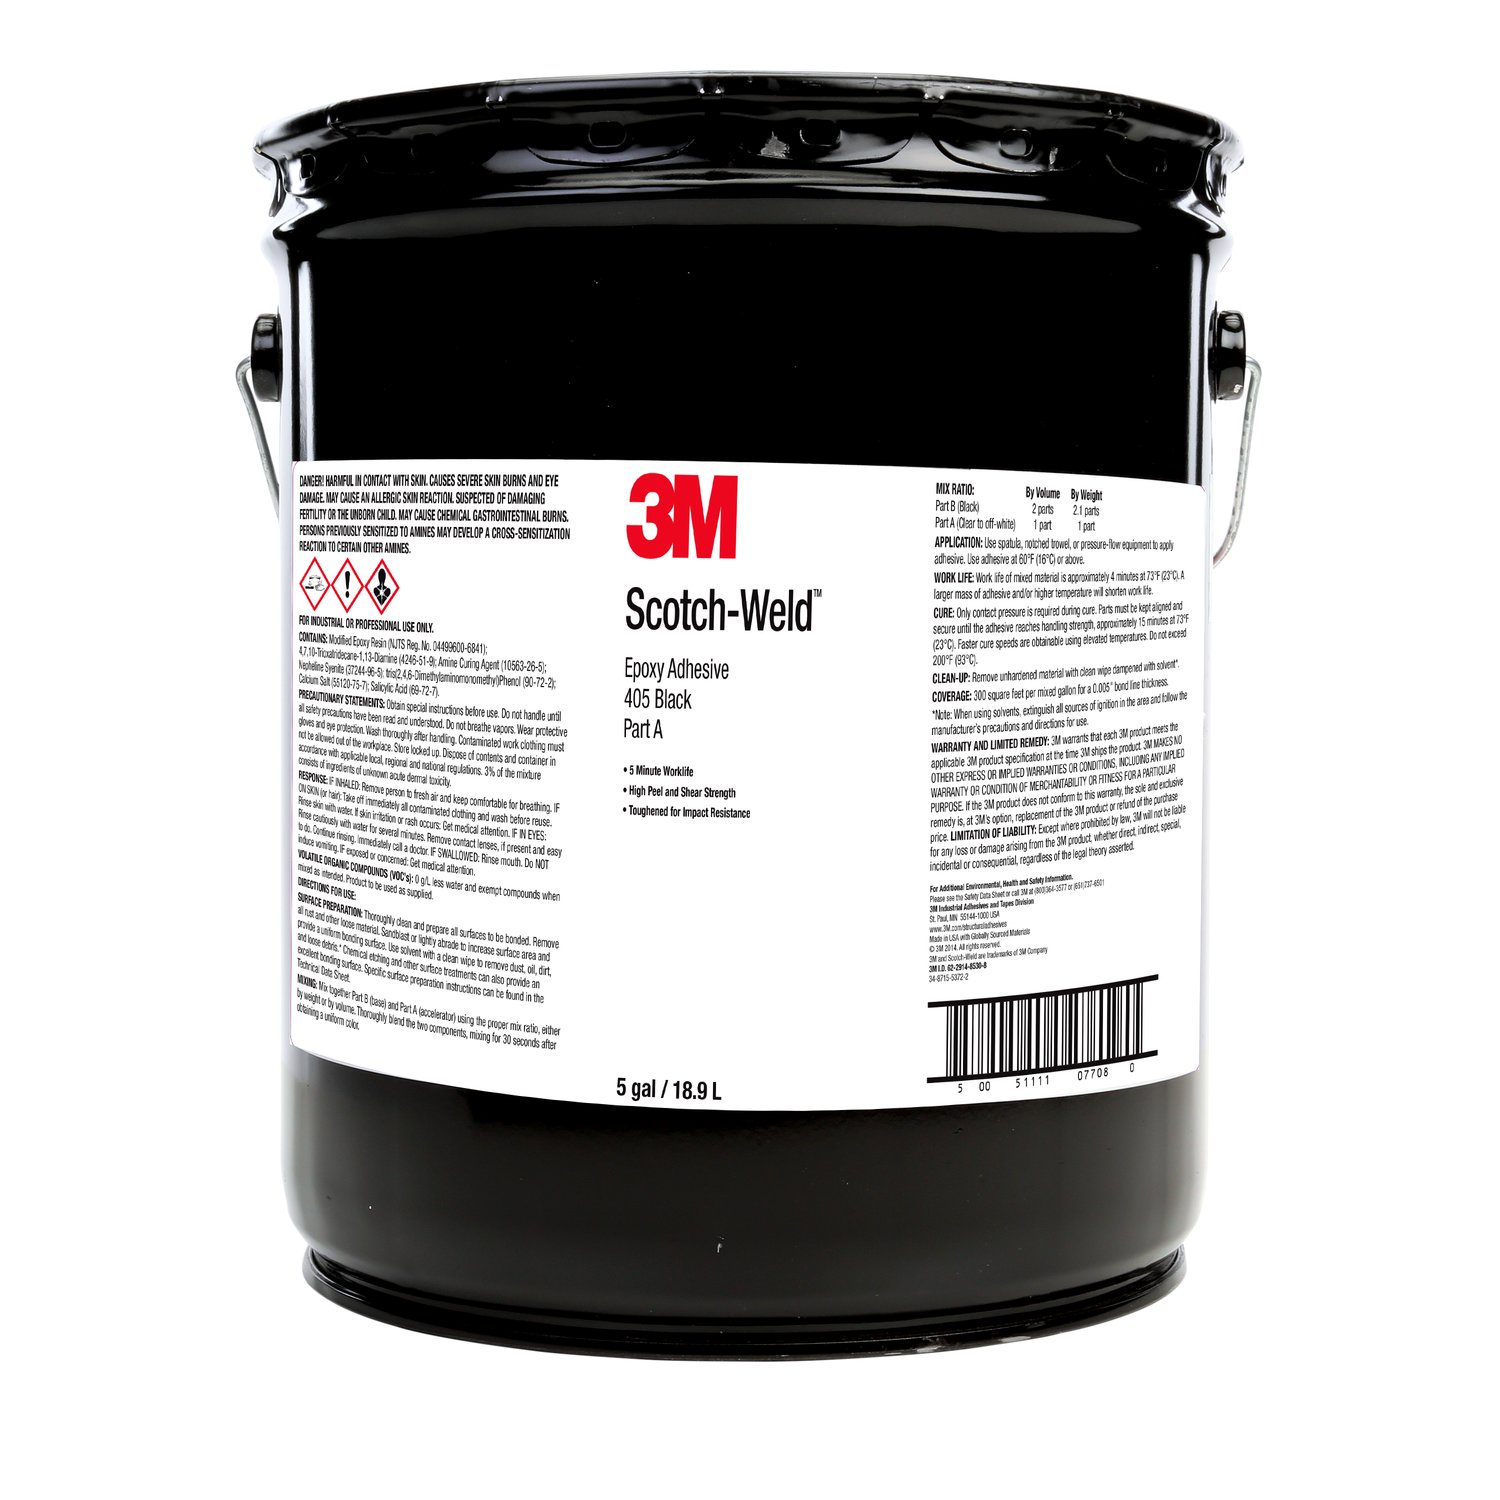 7010301041 - 3M Scotch-Weld Epoxy Adhesive 405, Black, Part A, 5 Gallon (Pail),
Drum